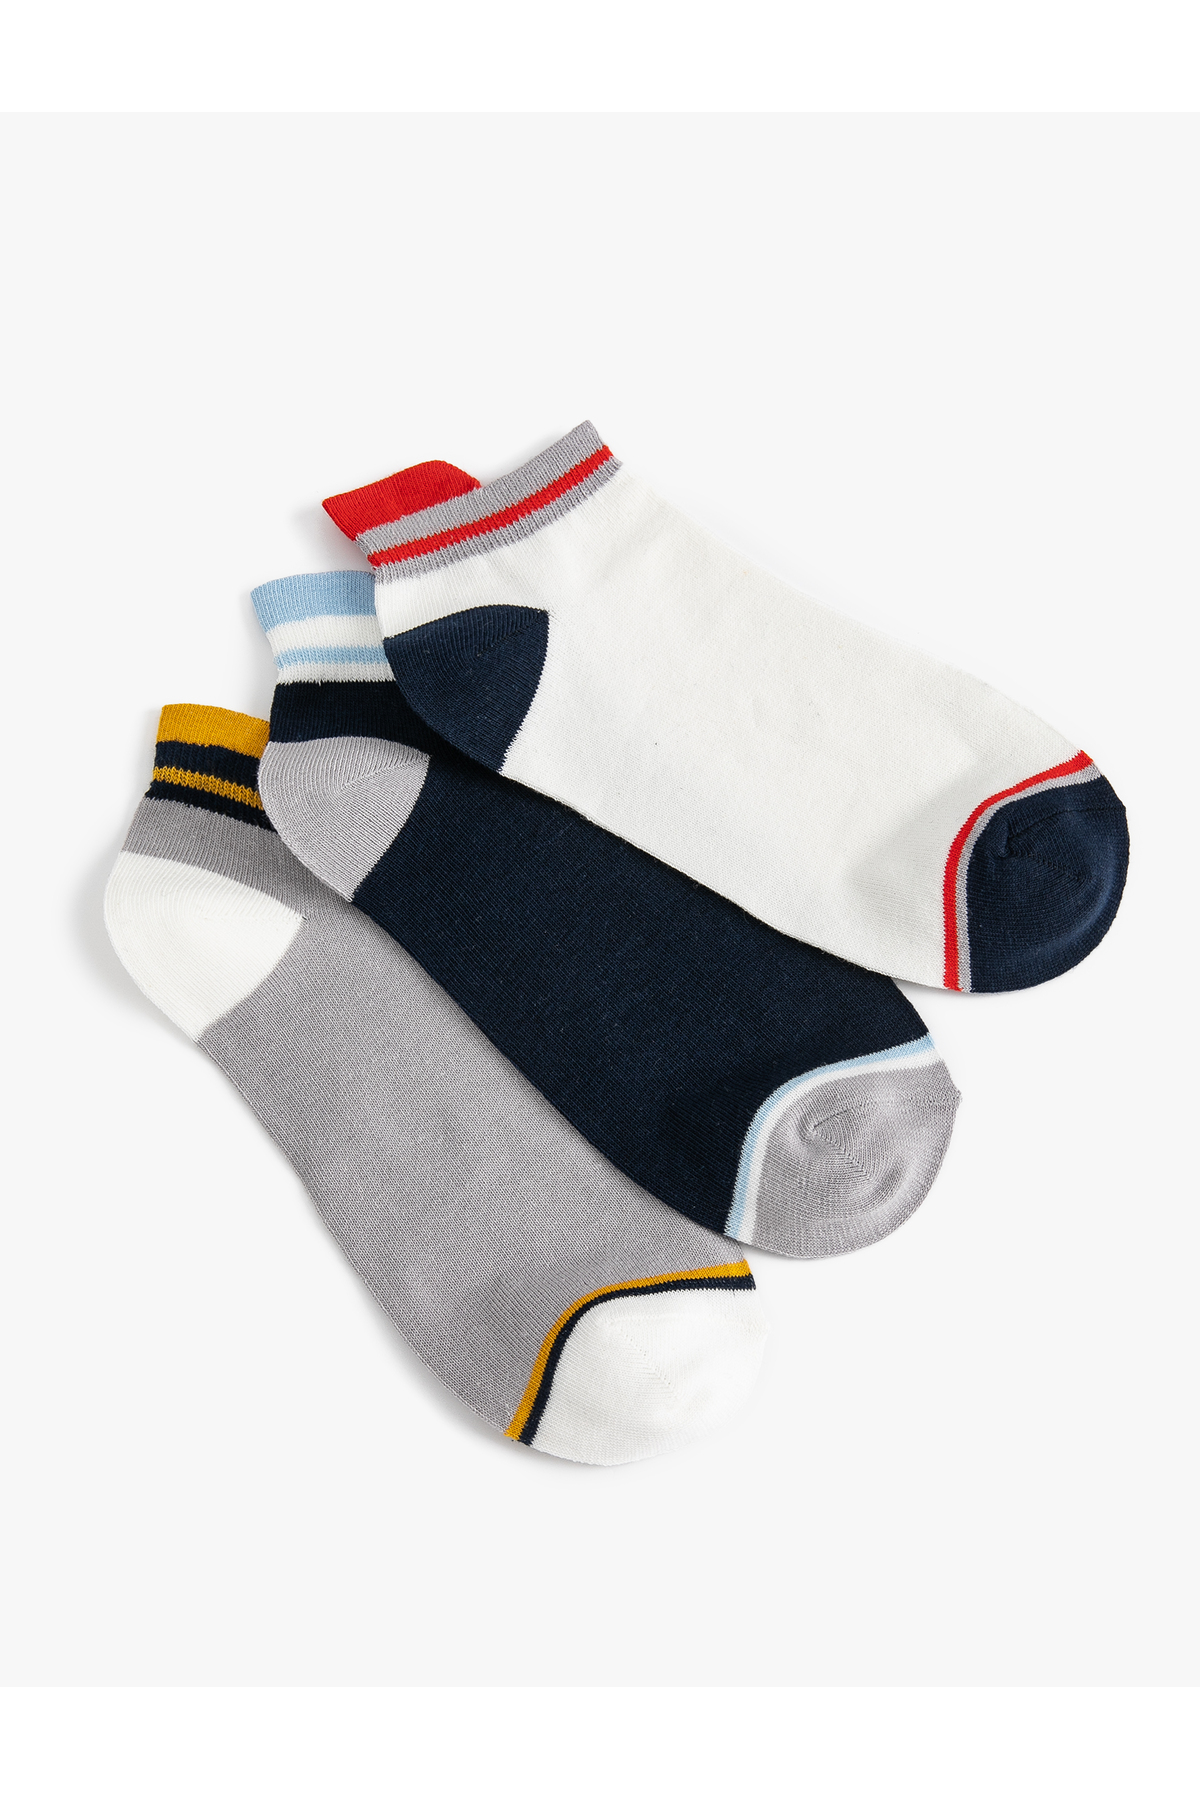 Koton 3-Pack Multi Colored College Socks Booties